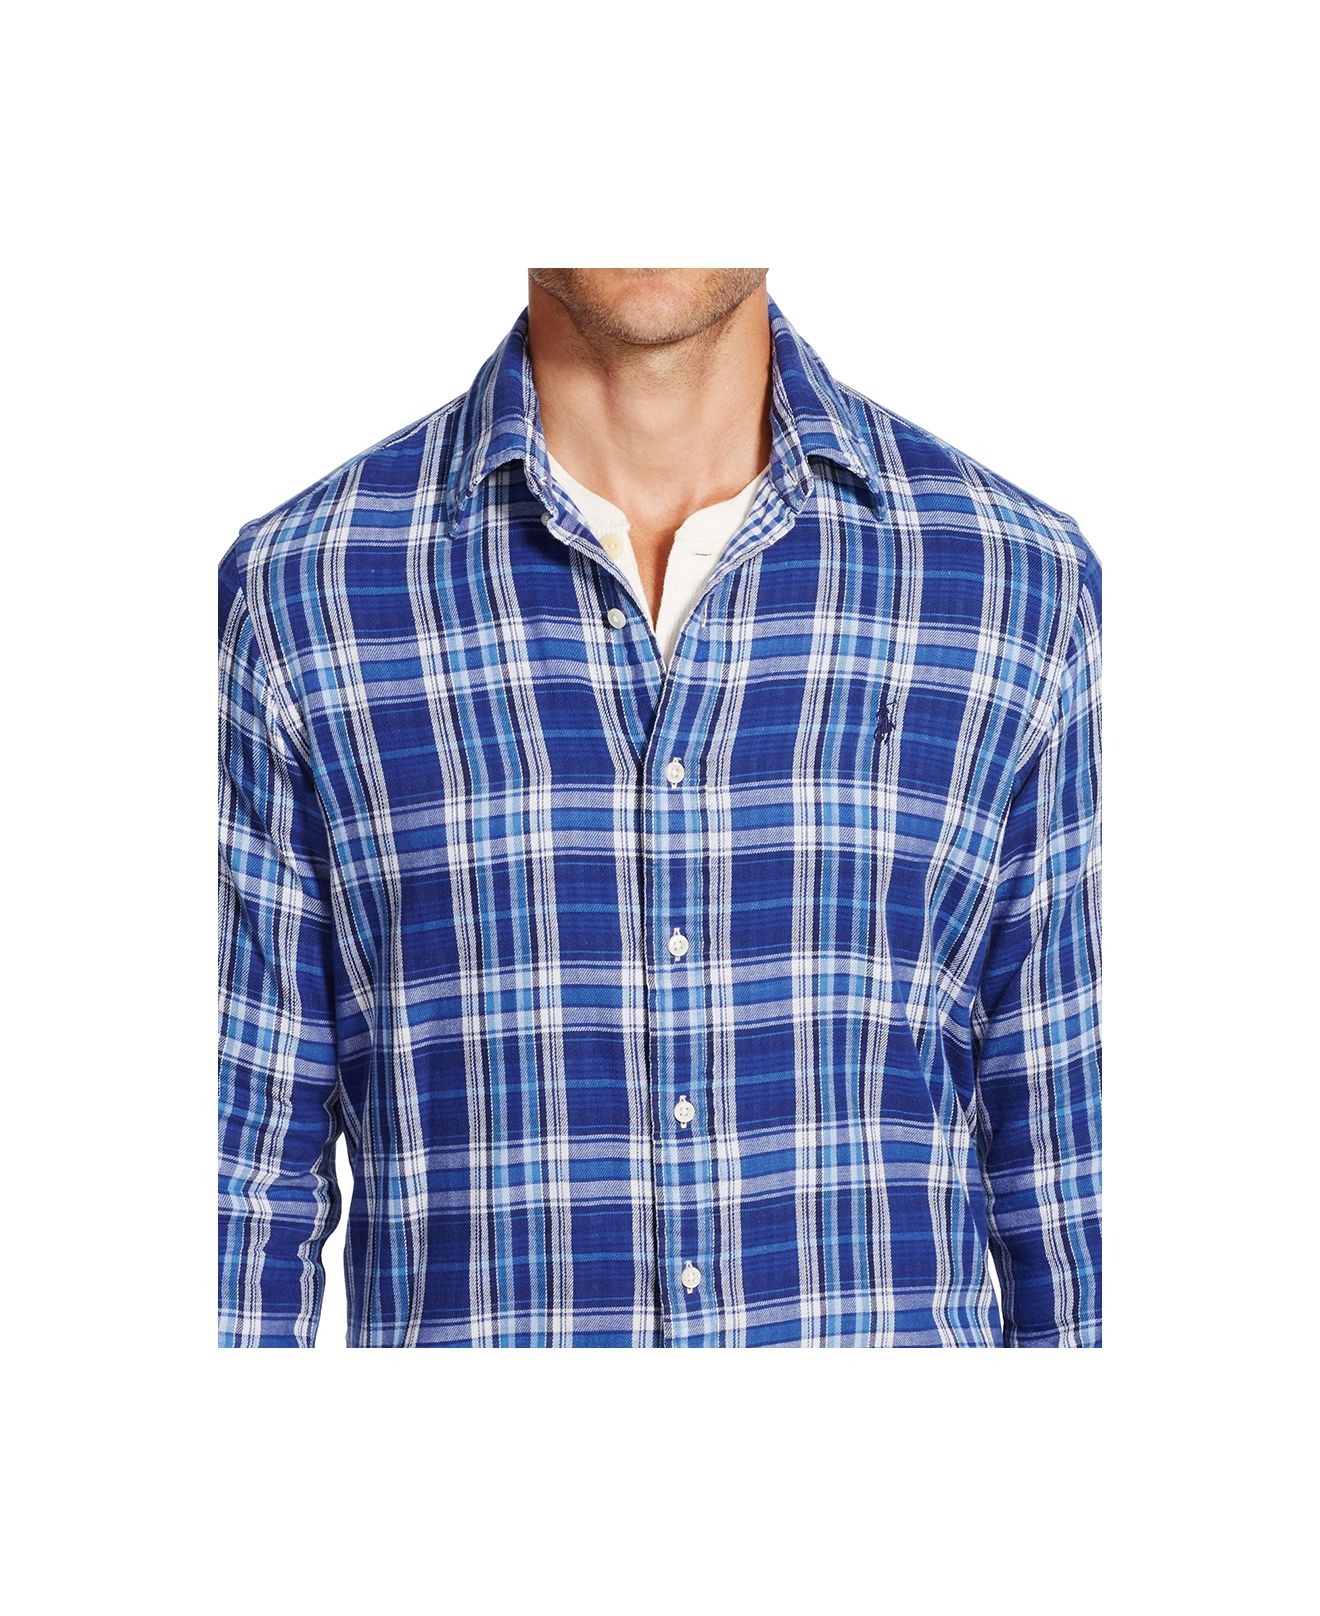 Polo Ralph Lauren Denim Men's Plaid Shirt in Dark Blue (Blue) for 